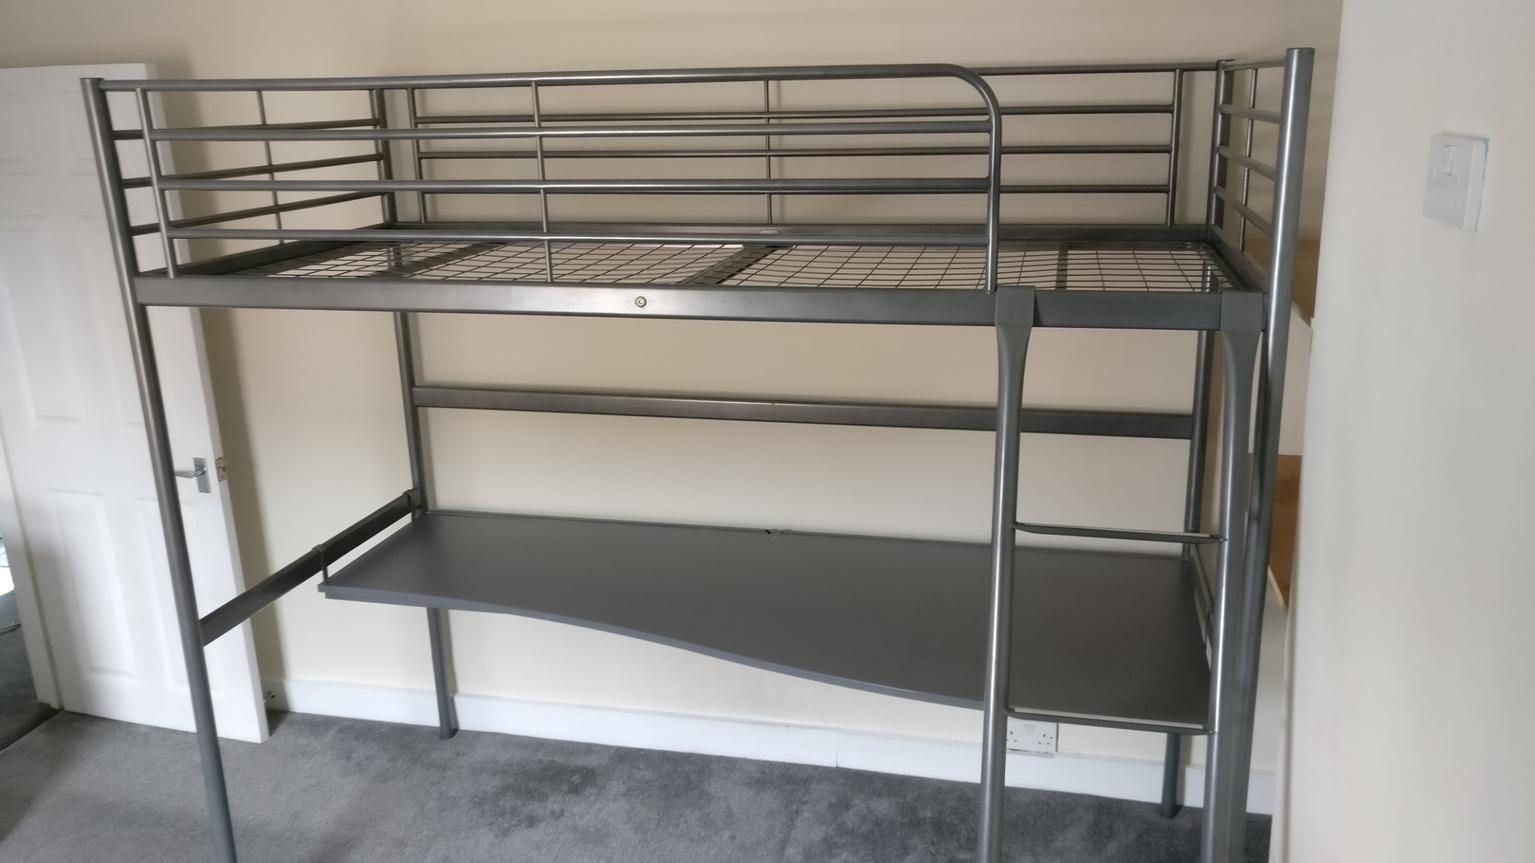 Ikea Svarta Loft Bed Desk Top In Bn17 Arun For 40 00 For Sale Shpock